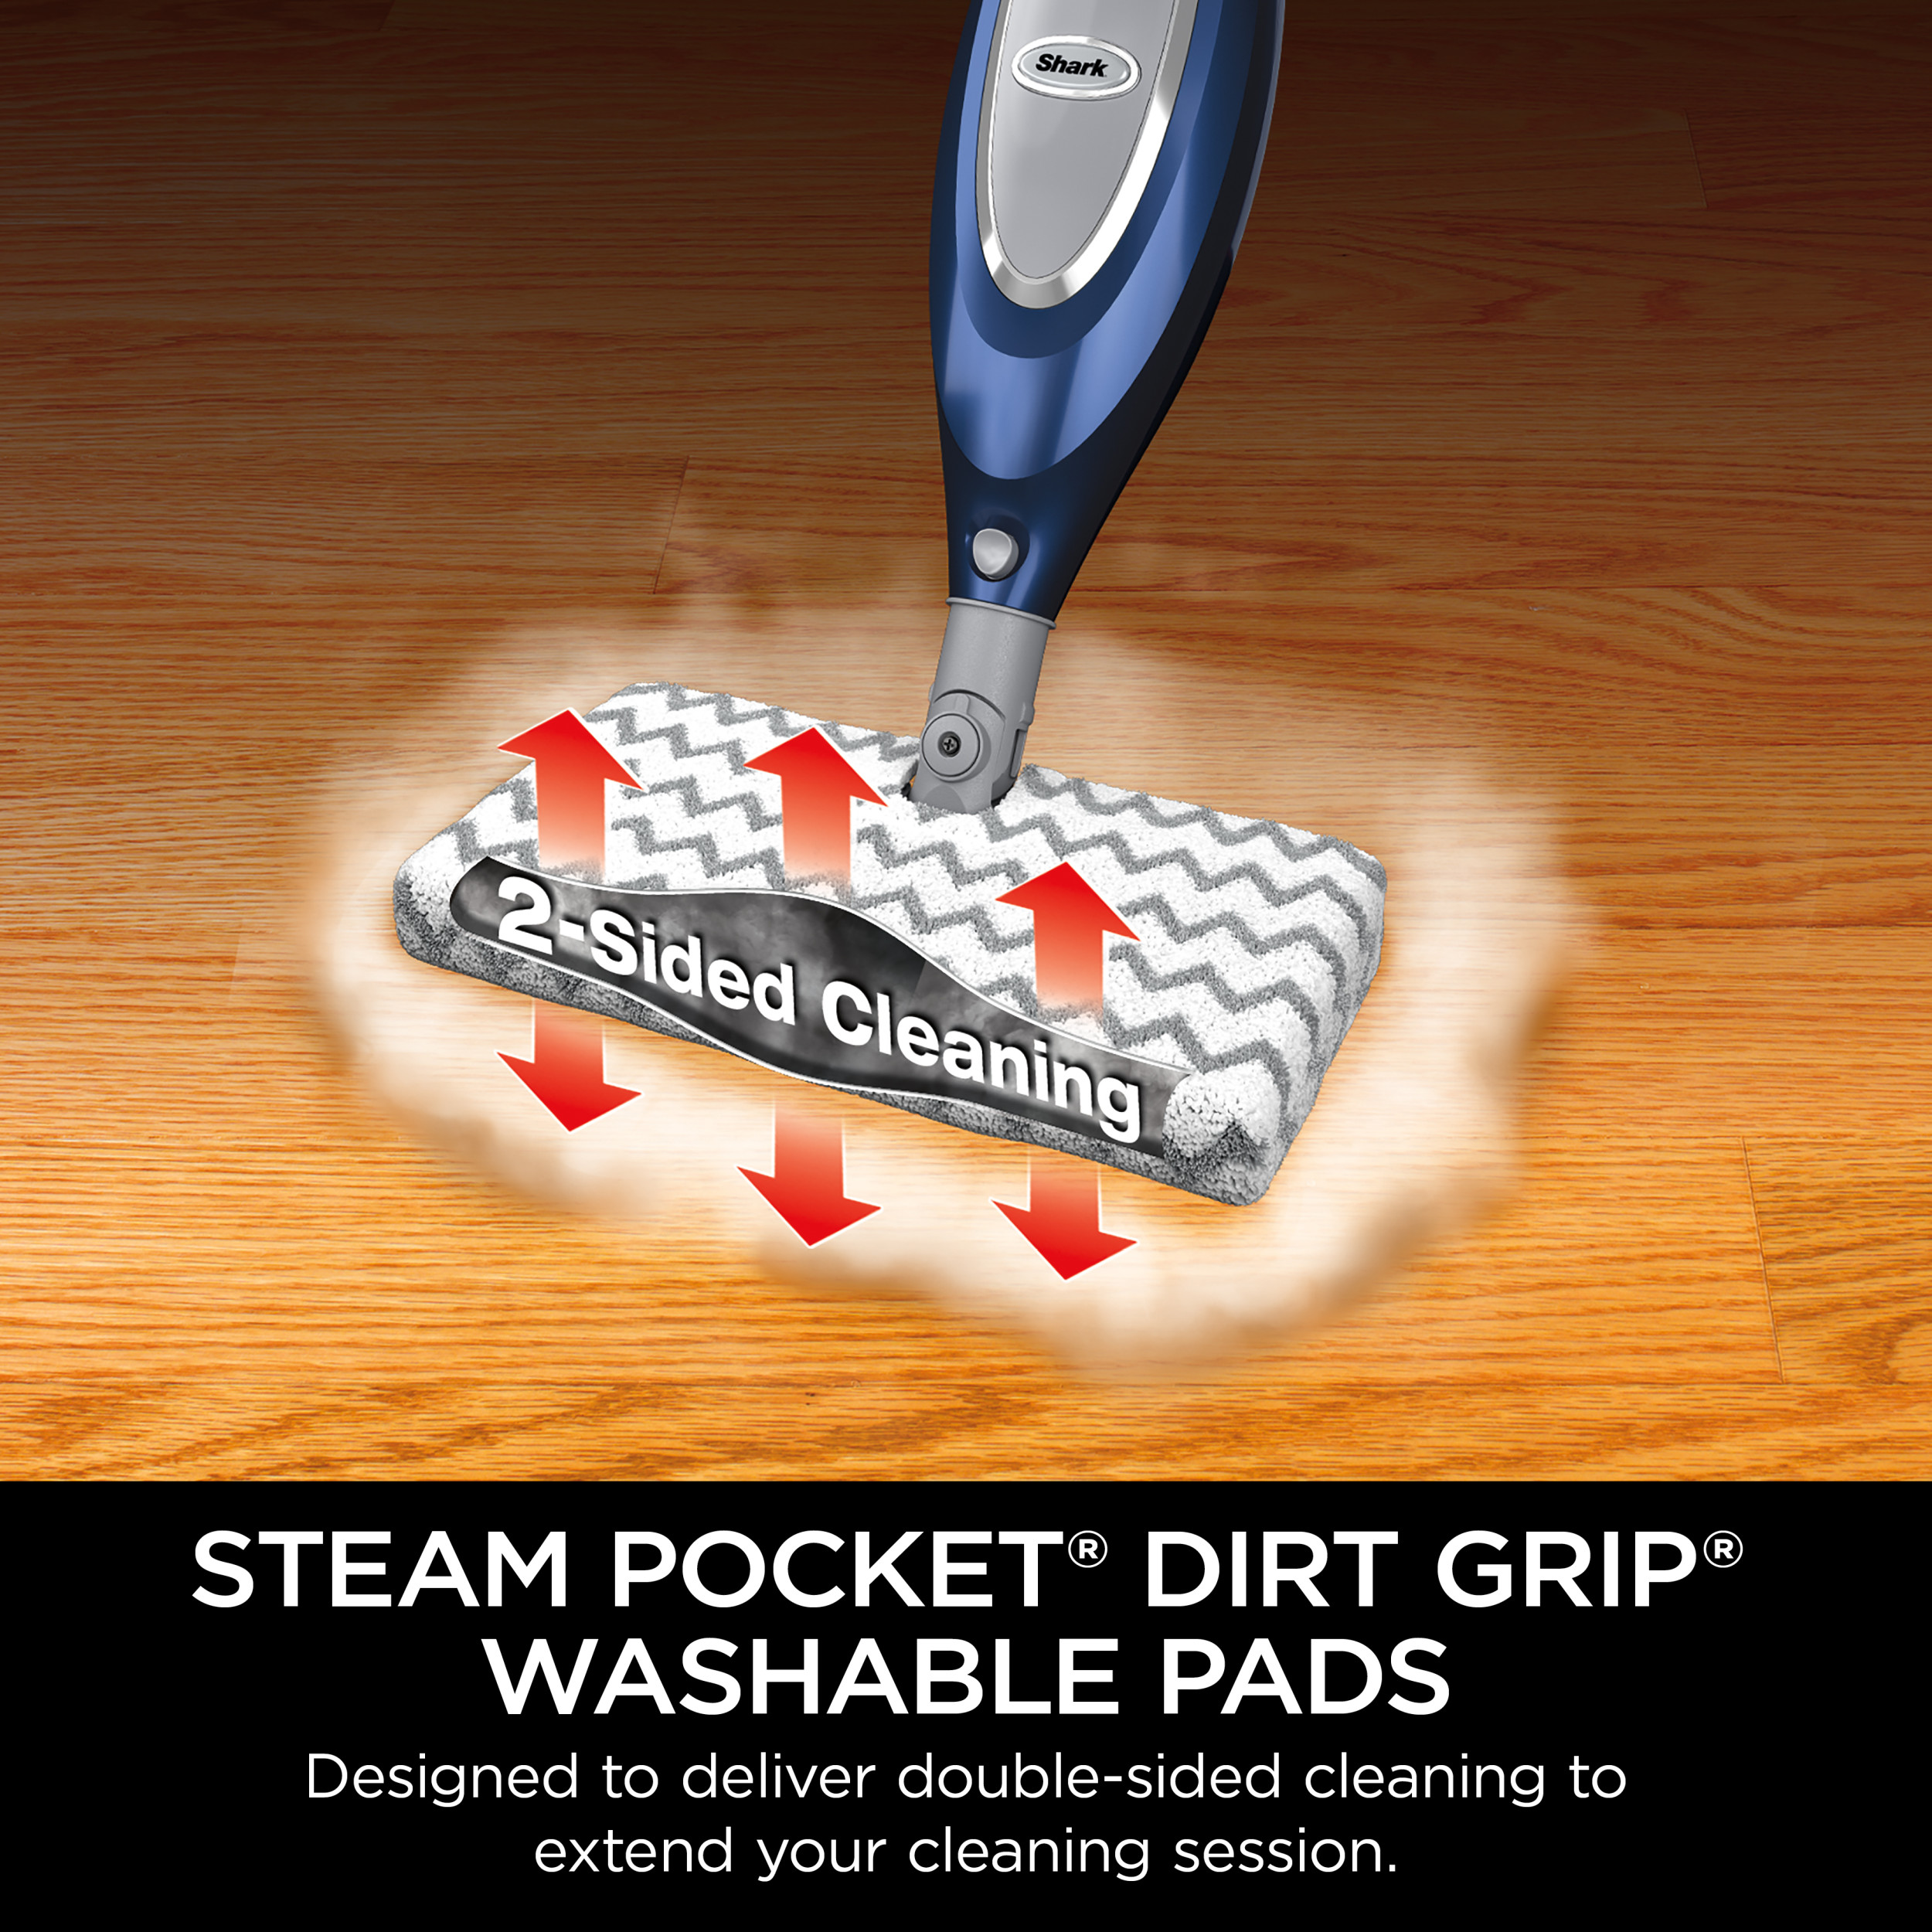 Restored Shark® Professional Steam Pocket® Mop for Hard Floors, Deep Cleaning, and Sanitization, SE460 (Refurbished) - image 4 of 9